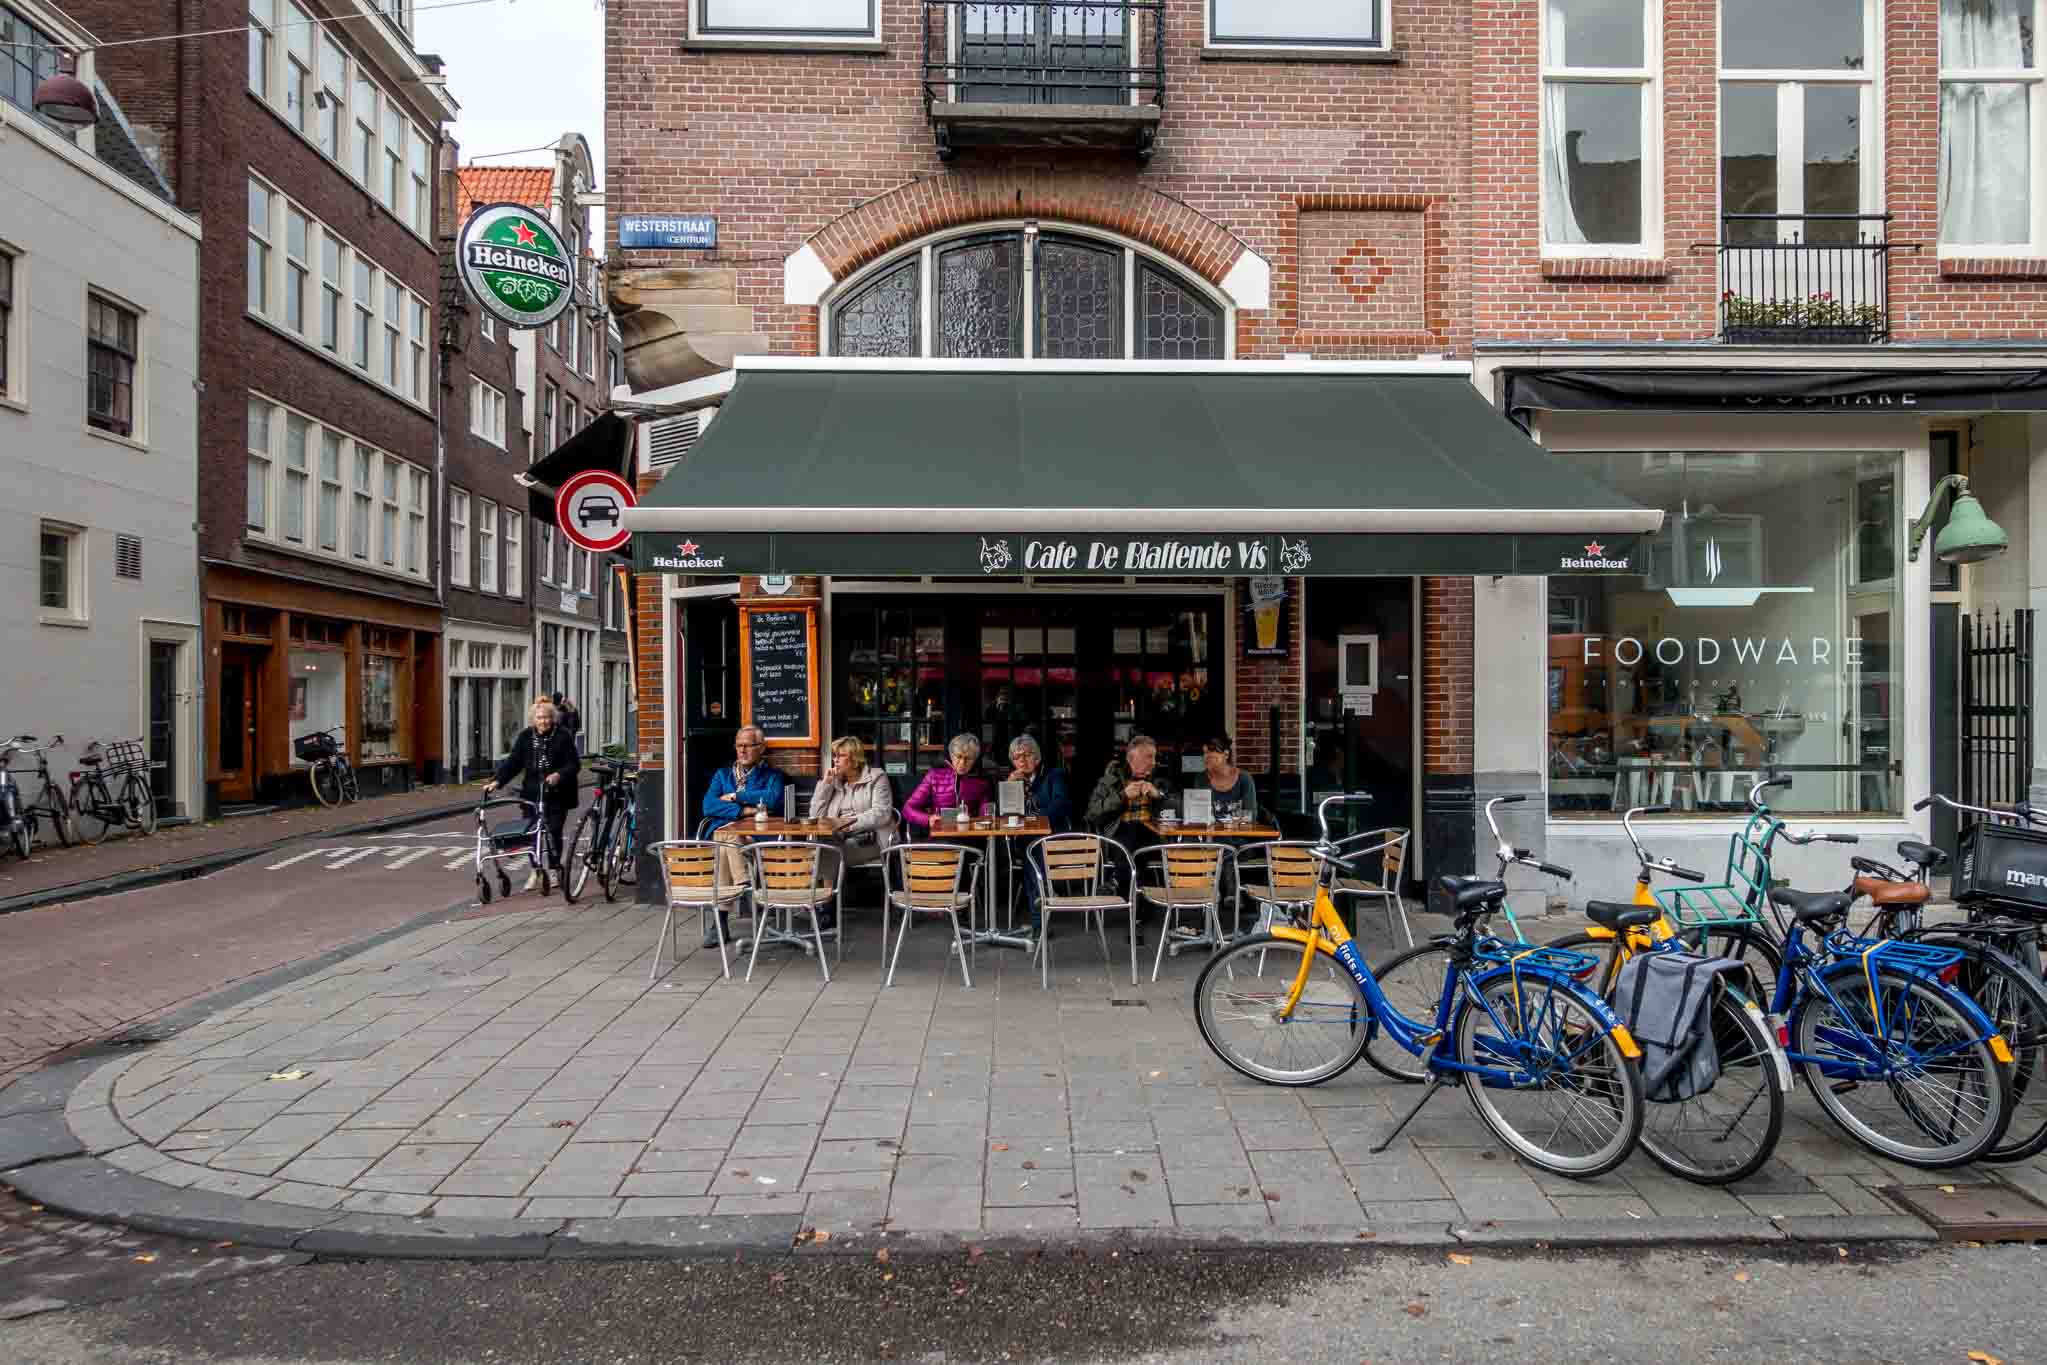 People sitting at a sidewalk cafe.